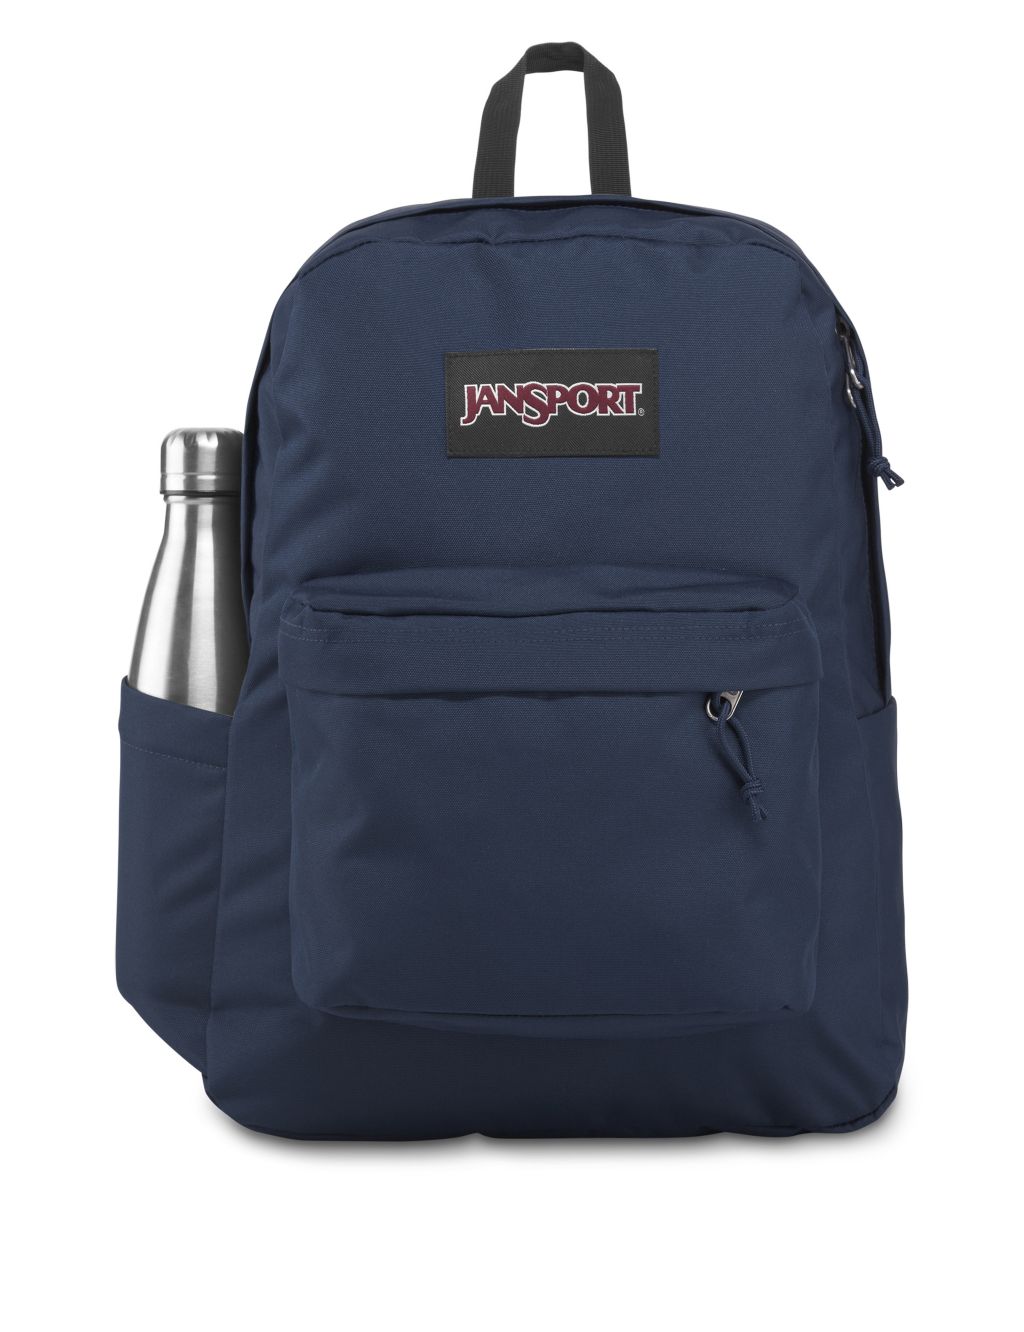 SuperBreak Plus Backpack image 5